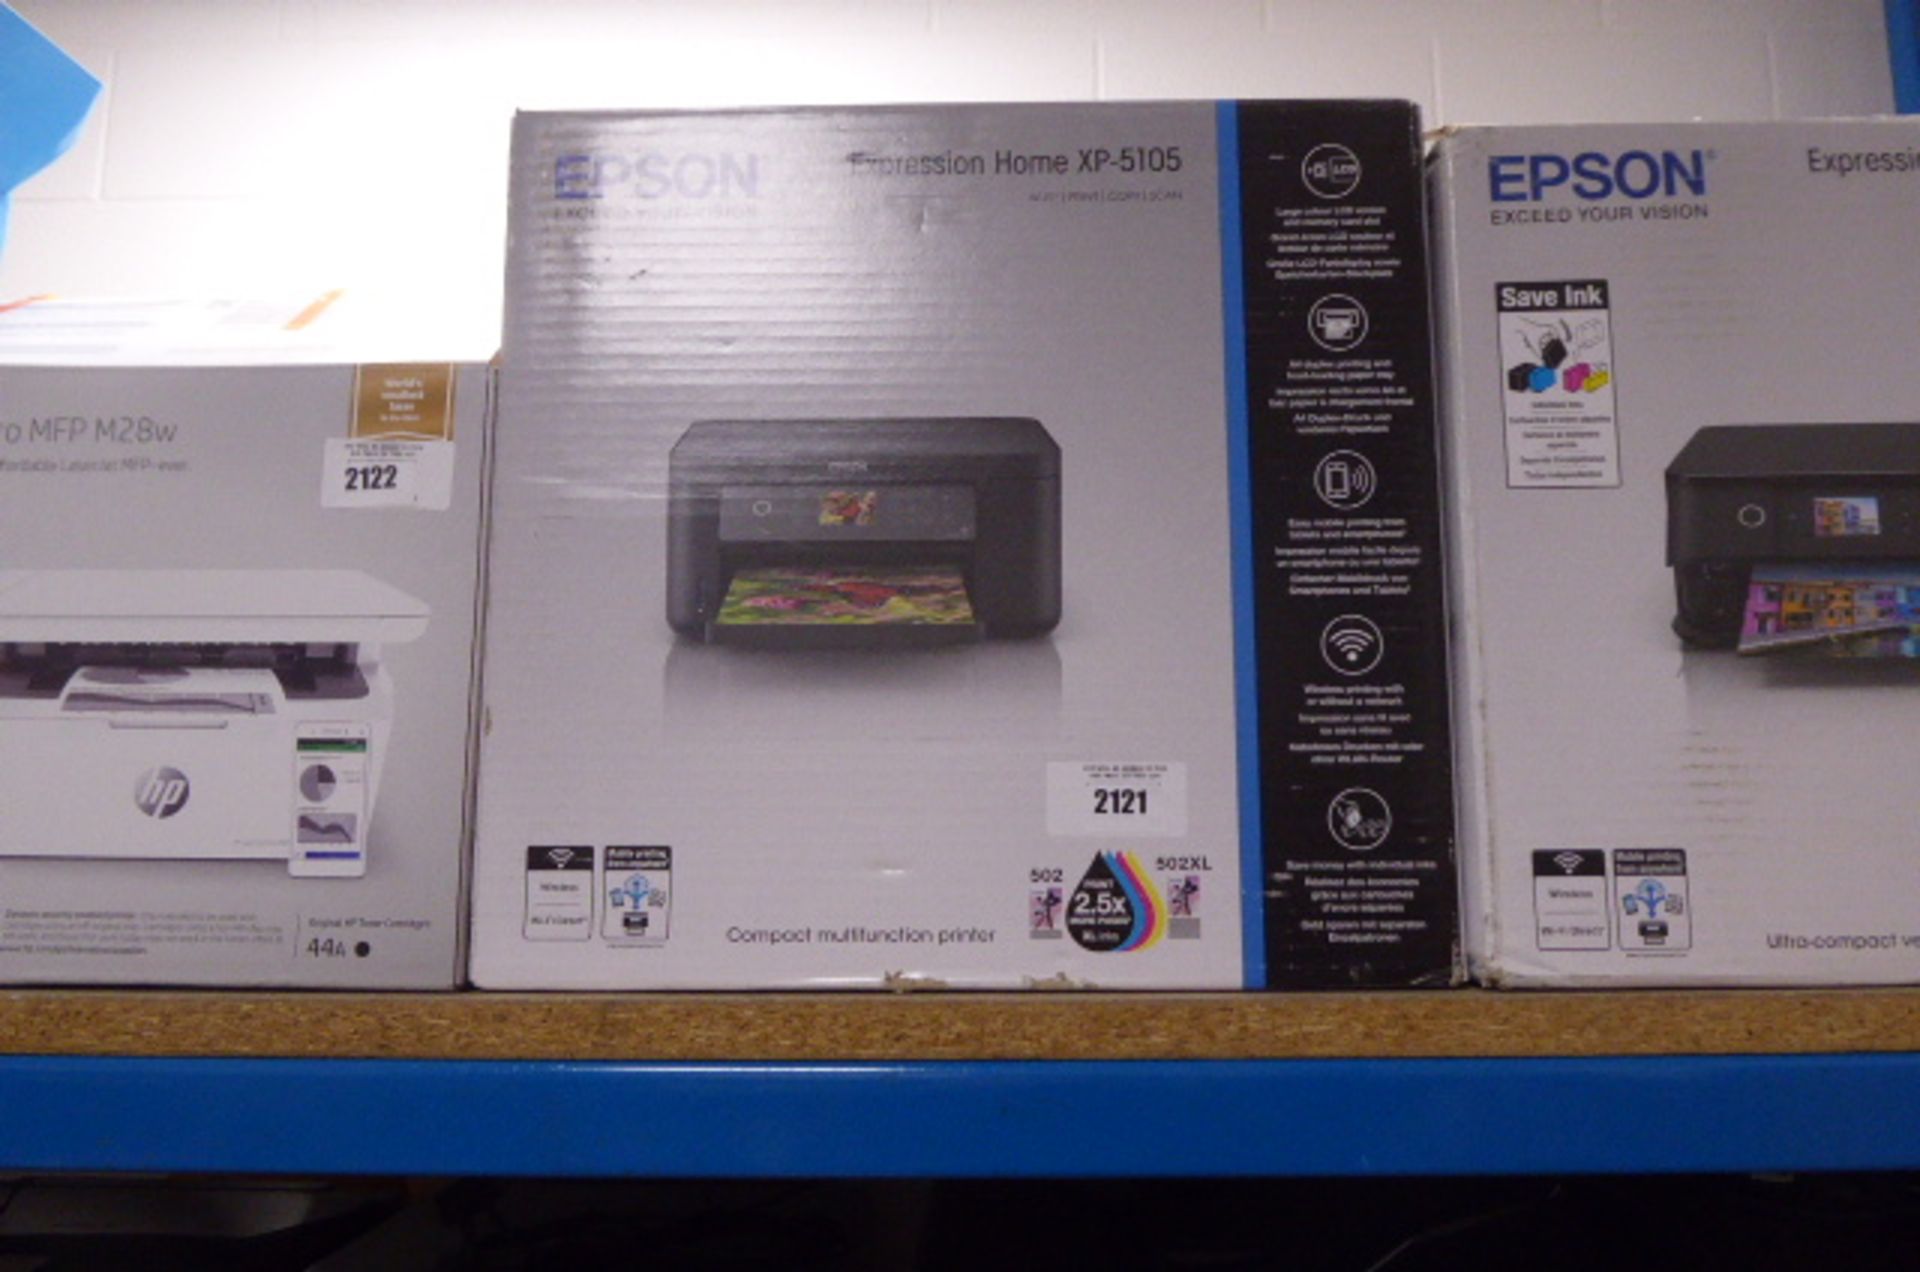 Epson Expression Home XP-5105 printer in box